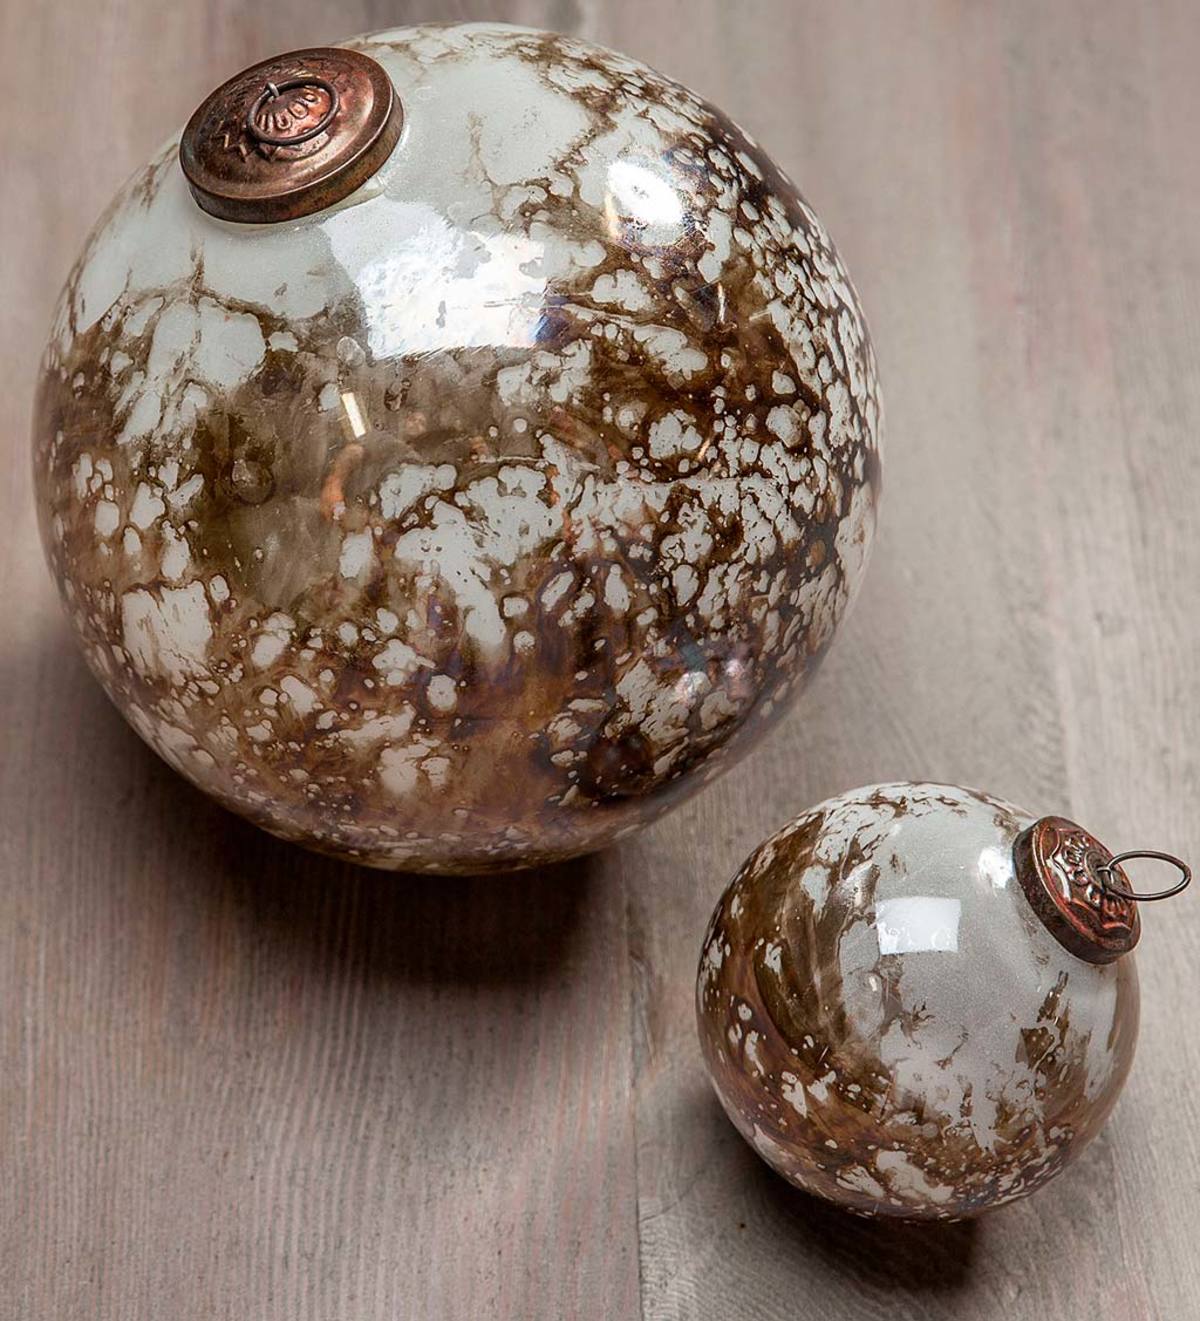 Marbled Mercury Glass Ornaments